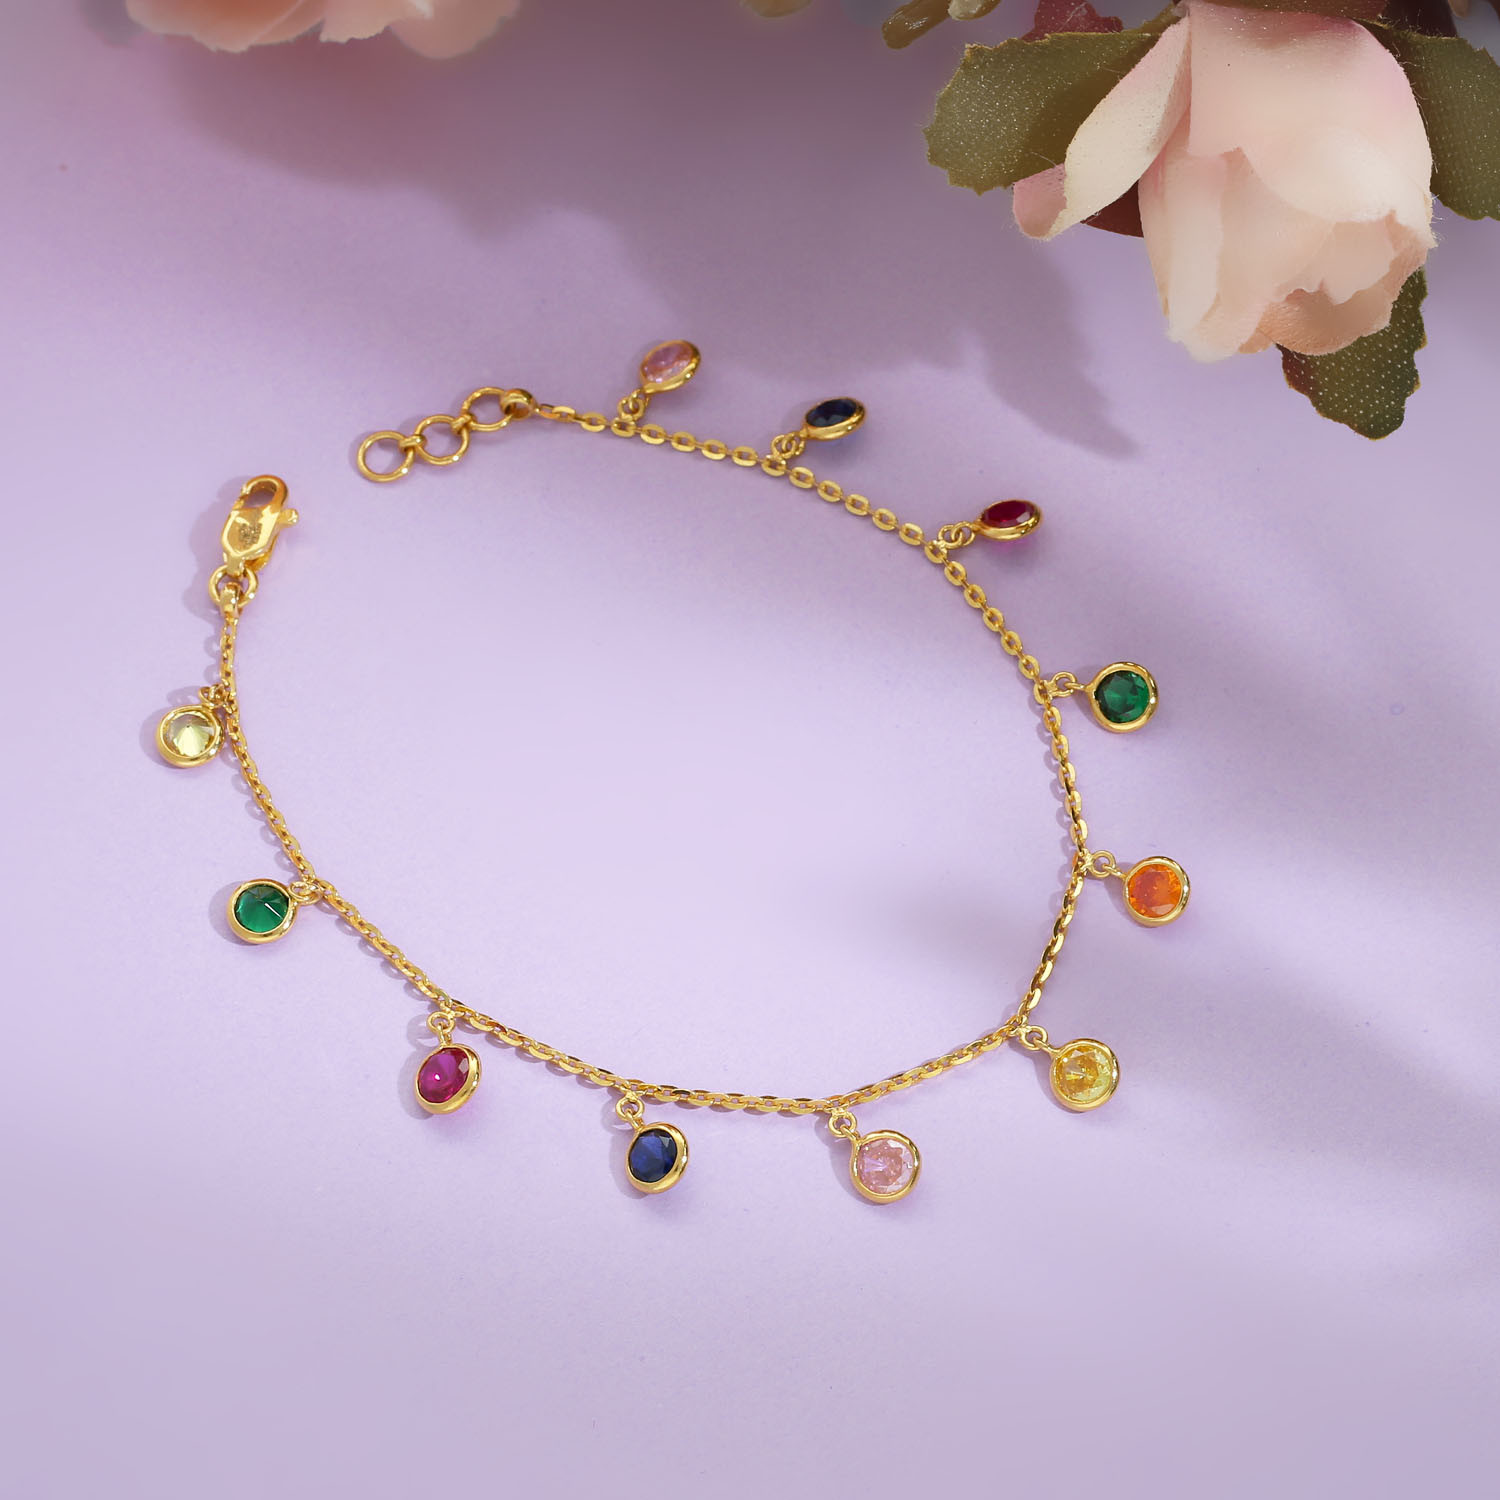 Buy Malabar Gold and Diamonds 22k Gold Bracelet for Women Online At Best  Price  Tata CLiQ